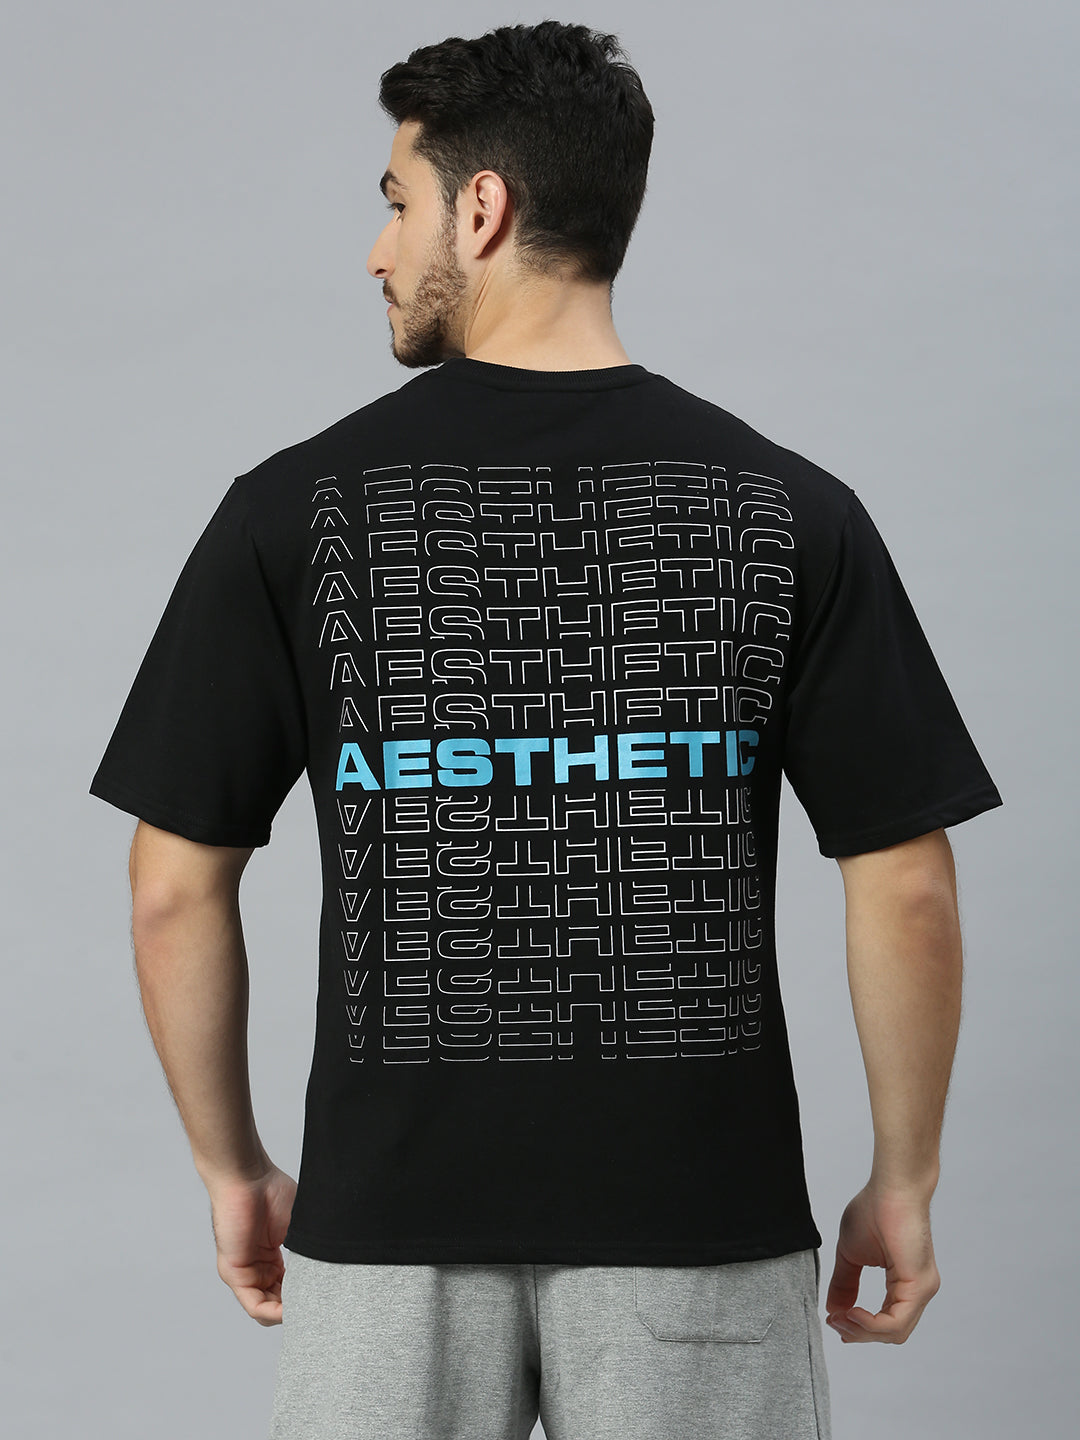 Aesthetics Oversized Tshirt